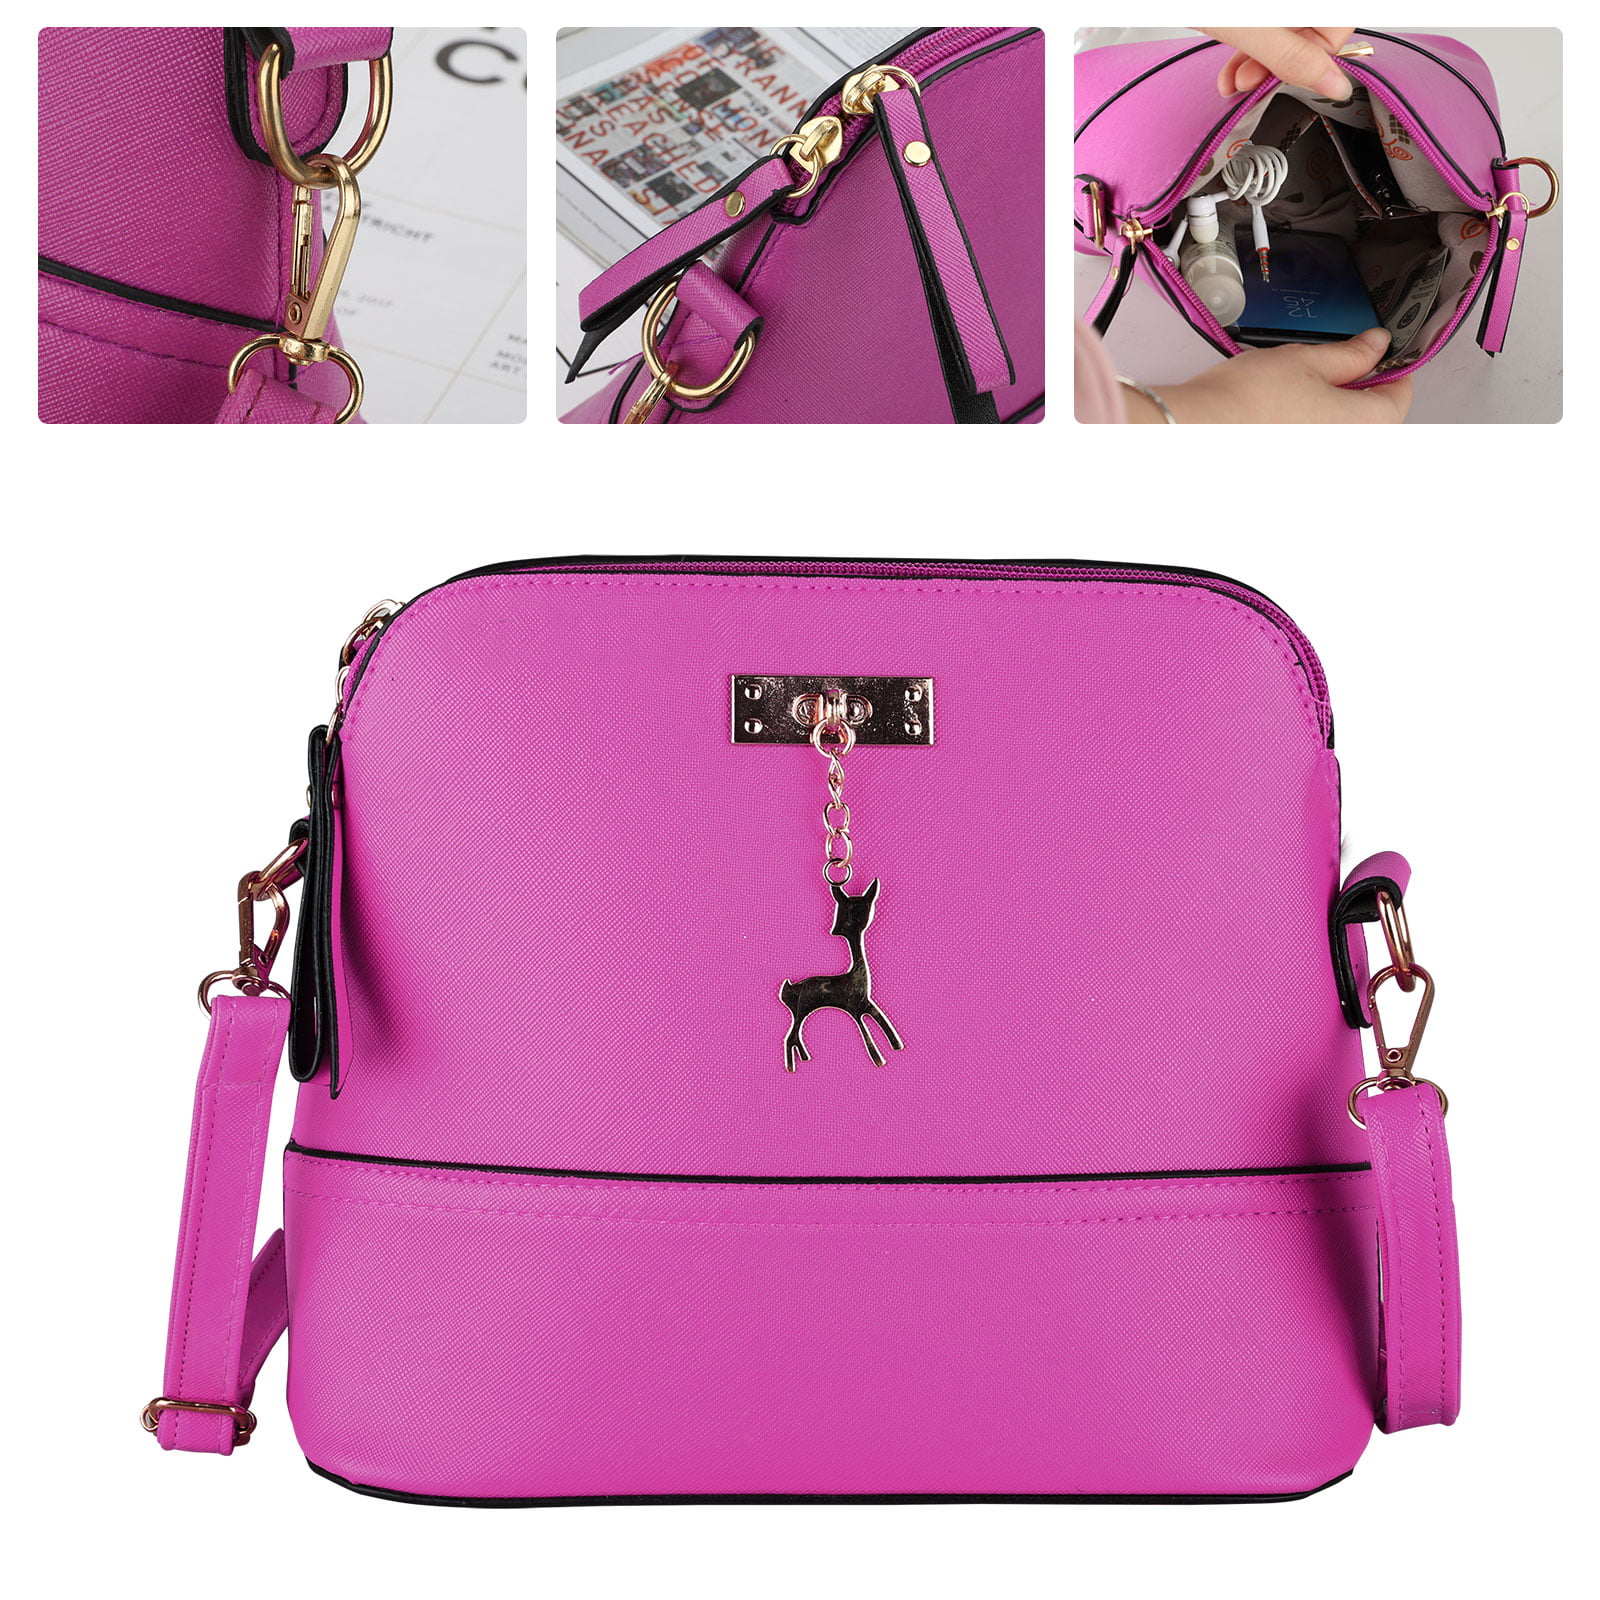 EEEkit - Women Crossbody Shoulder Bags Small Adjustable Strap Handbags,Elegant Lightweight ...